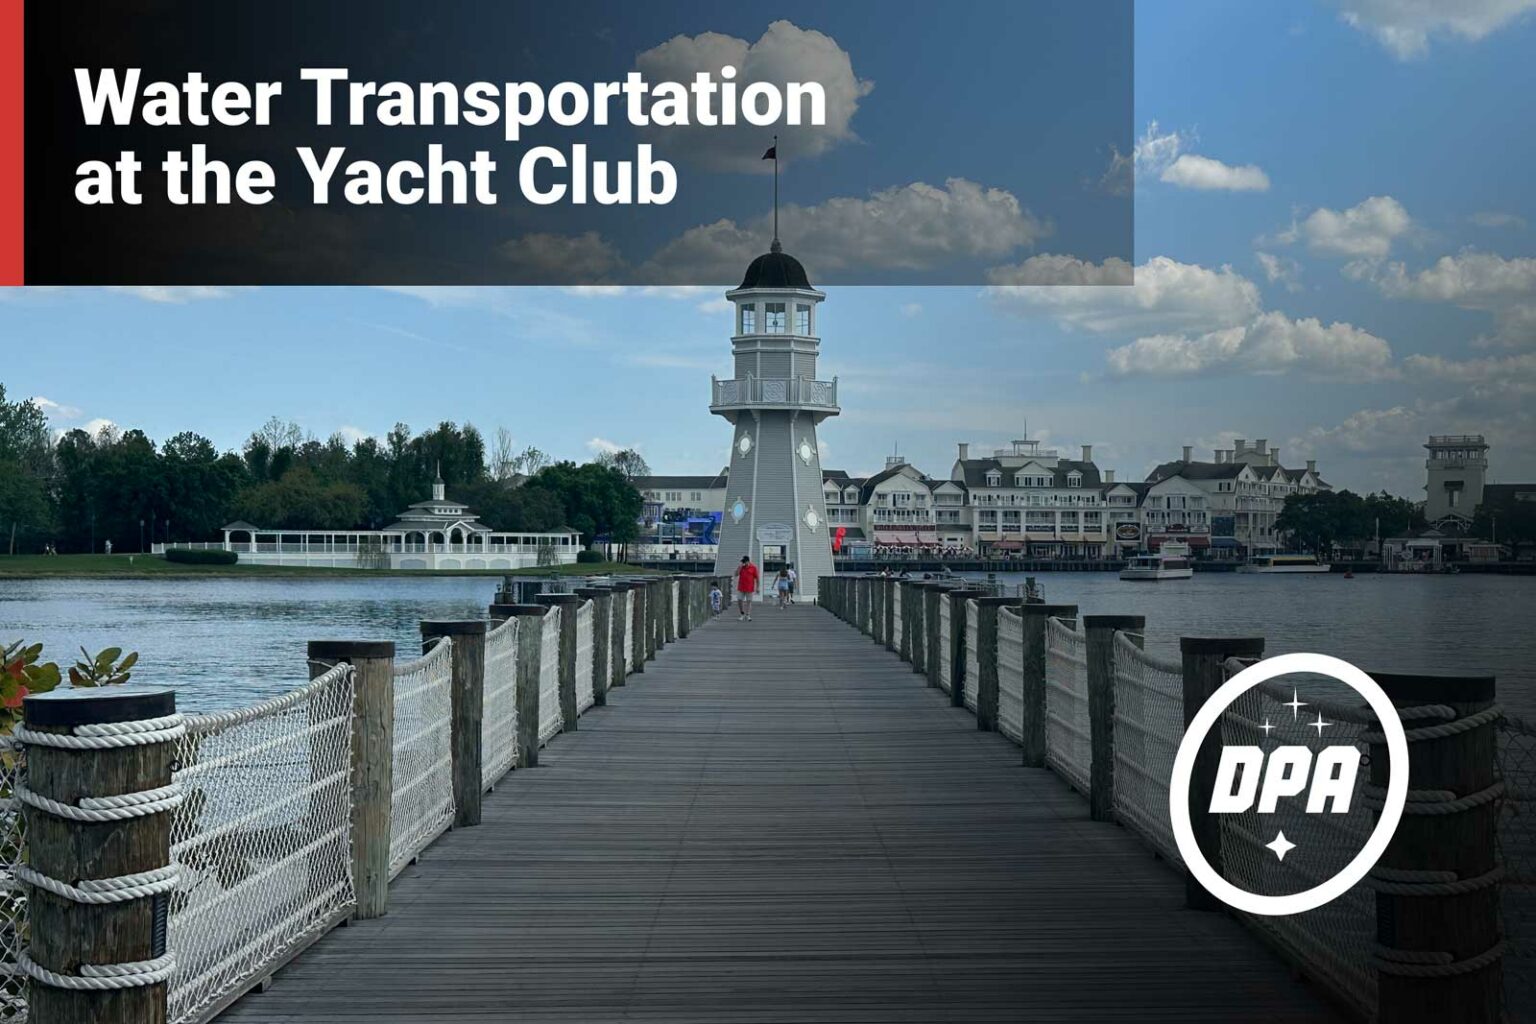 Disney's Yacht Club Water Transportation Options